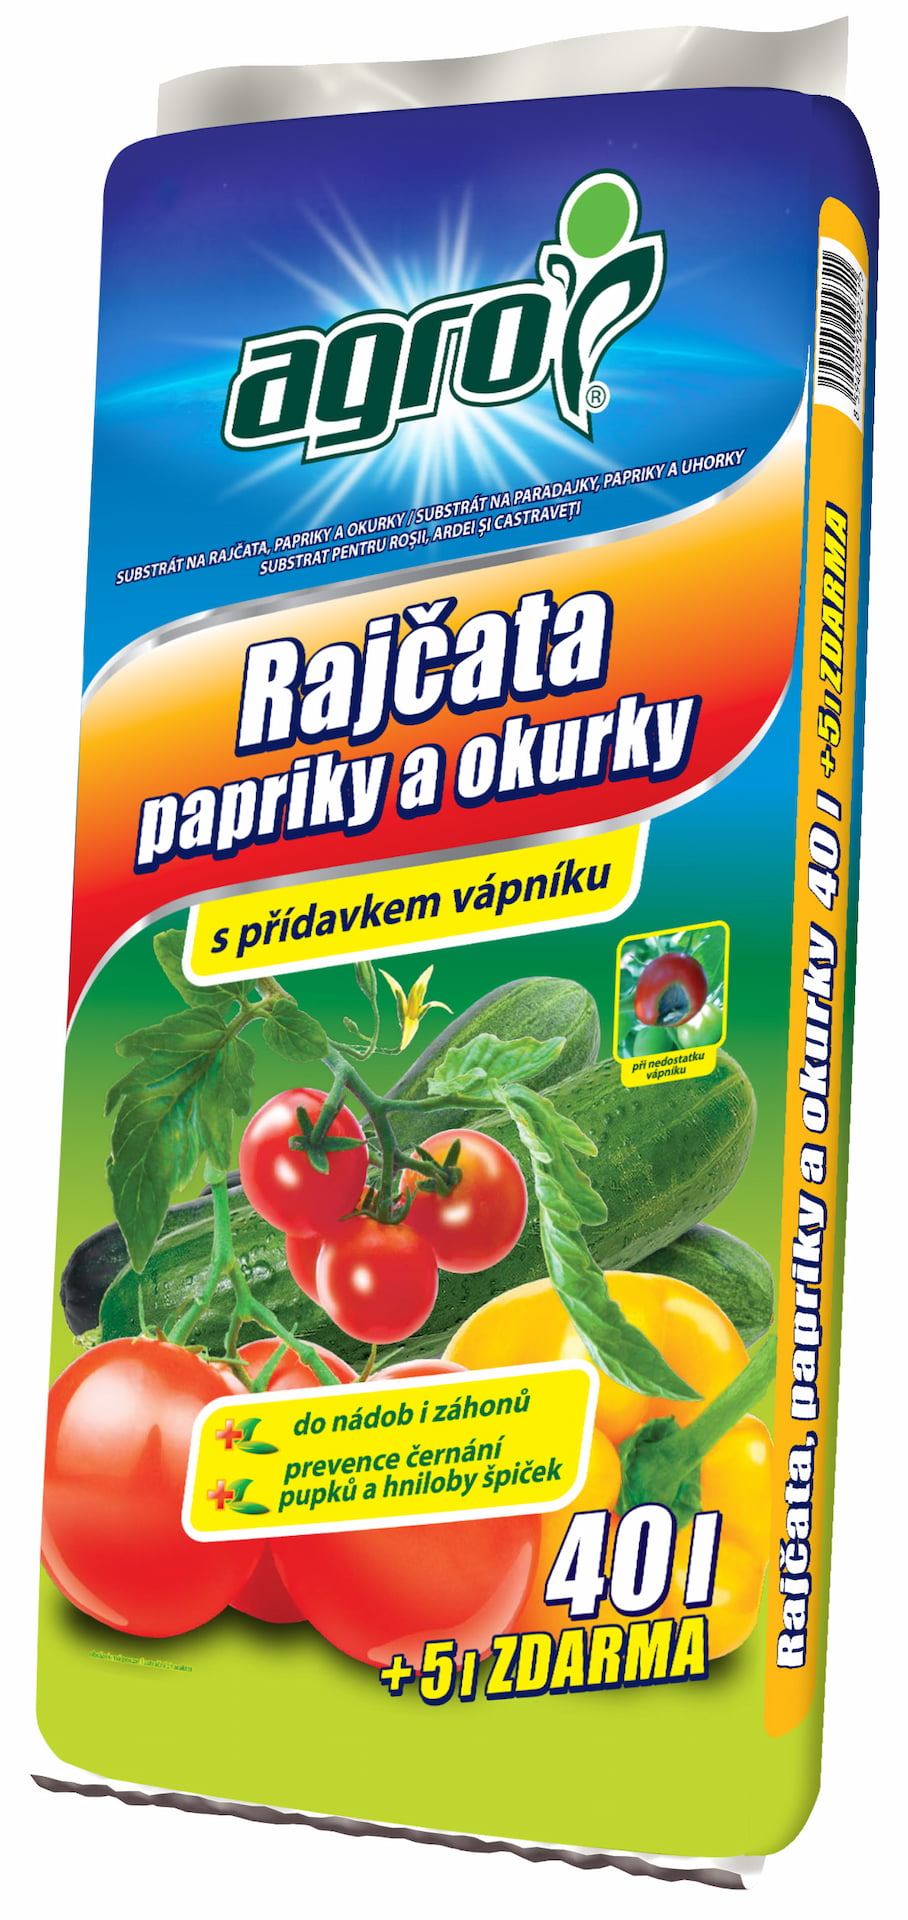 substr-t-na-paradajky-papriky-a-uhorky-agro-cs-slovakia-a-s